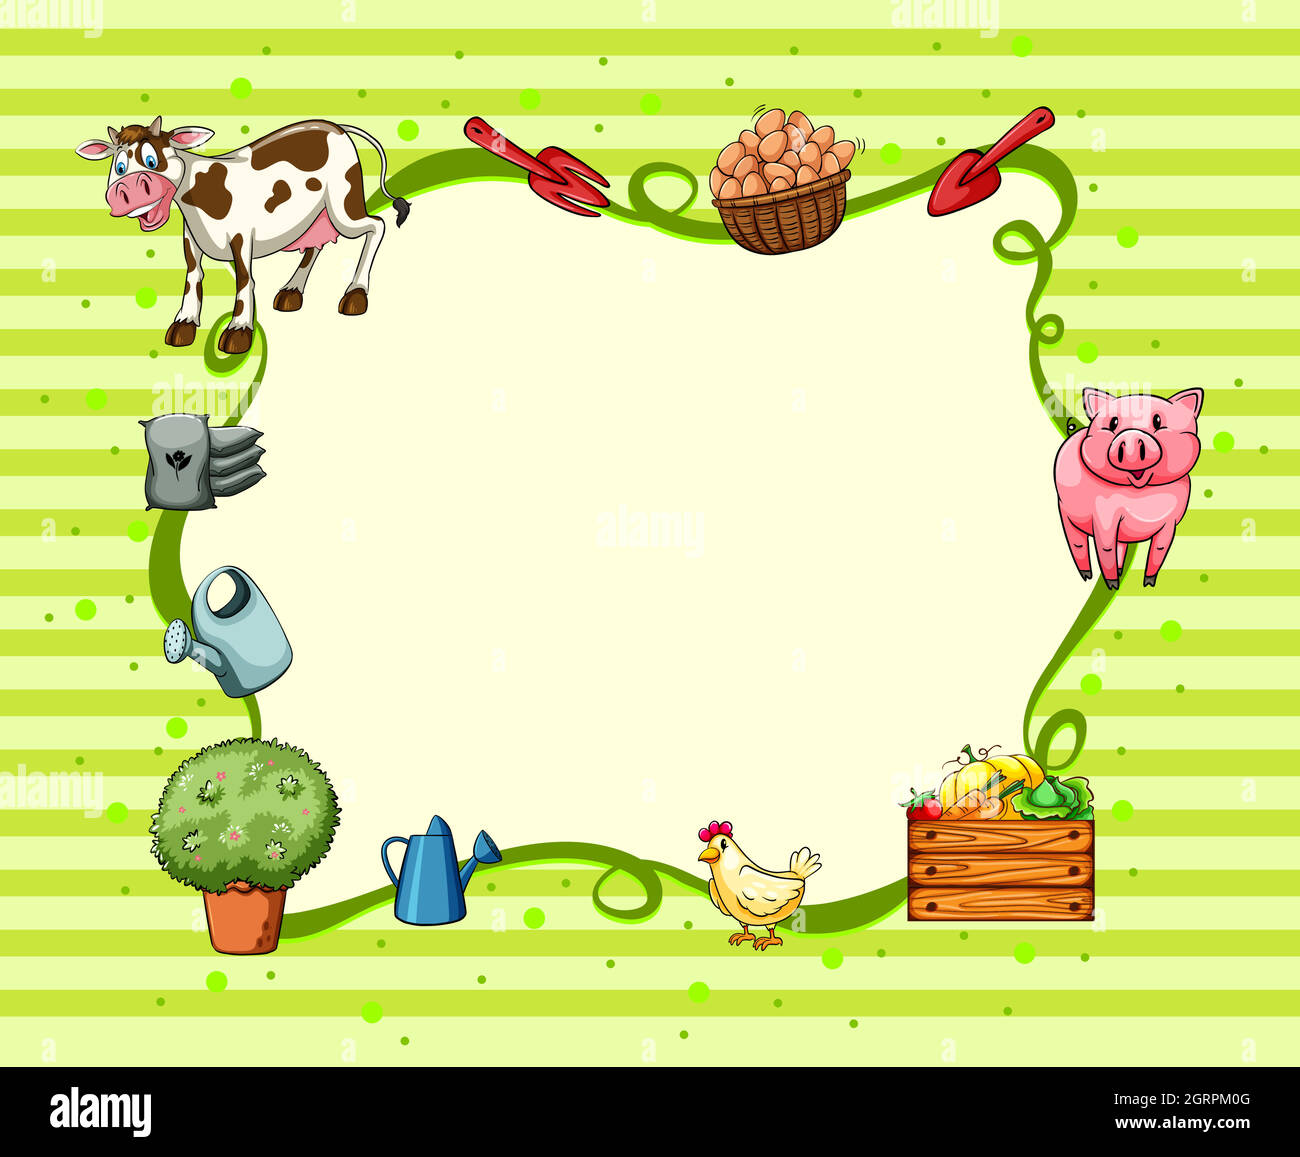 Border design animals Stock Vector Images - Alamy